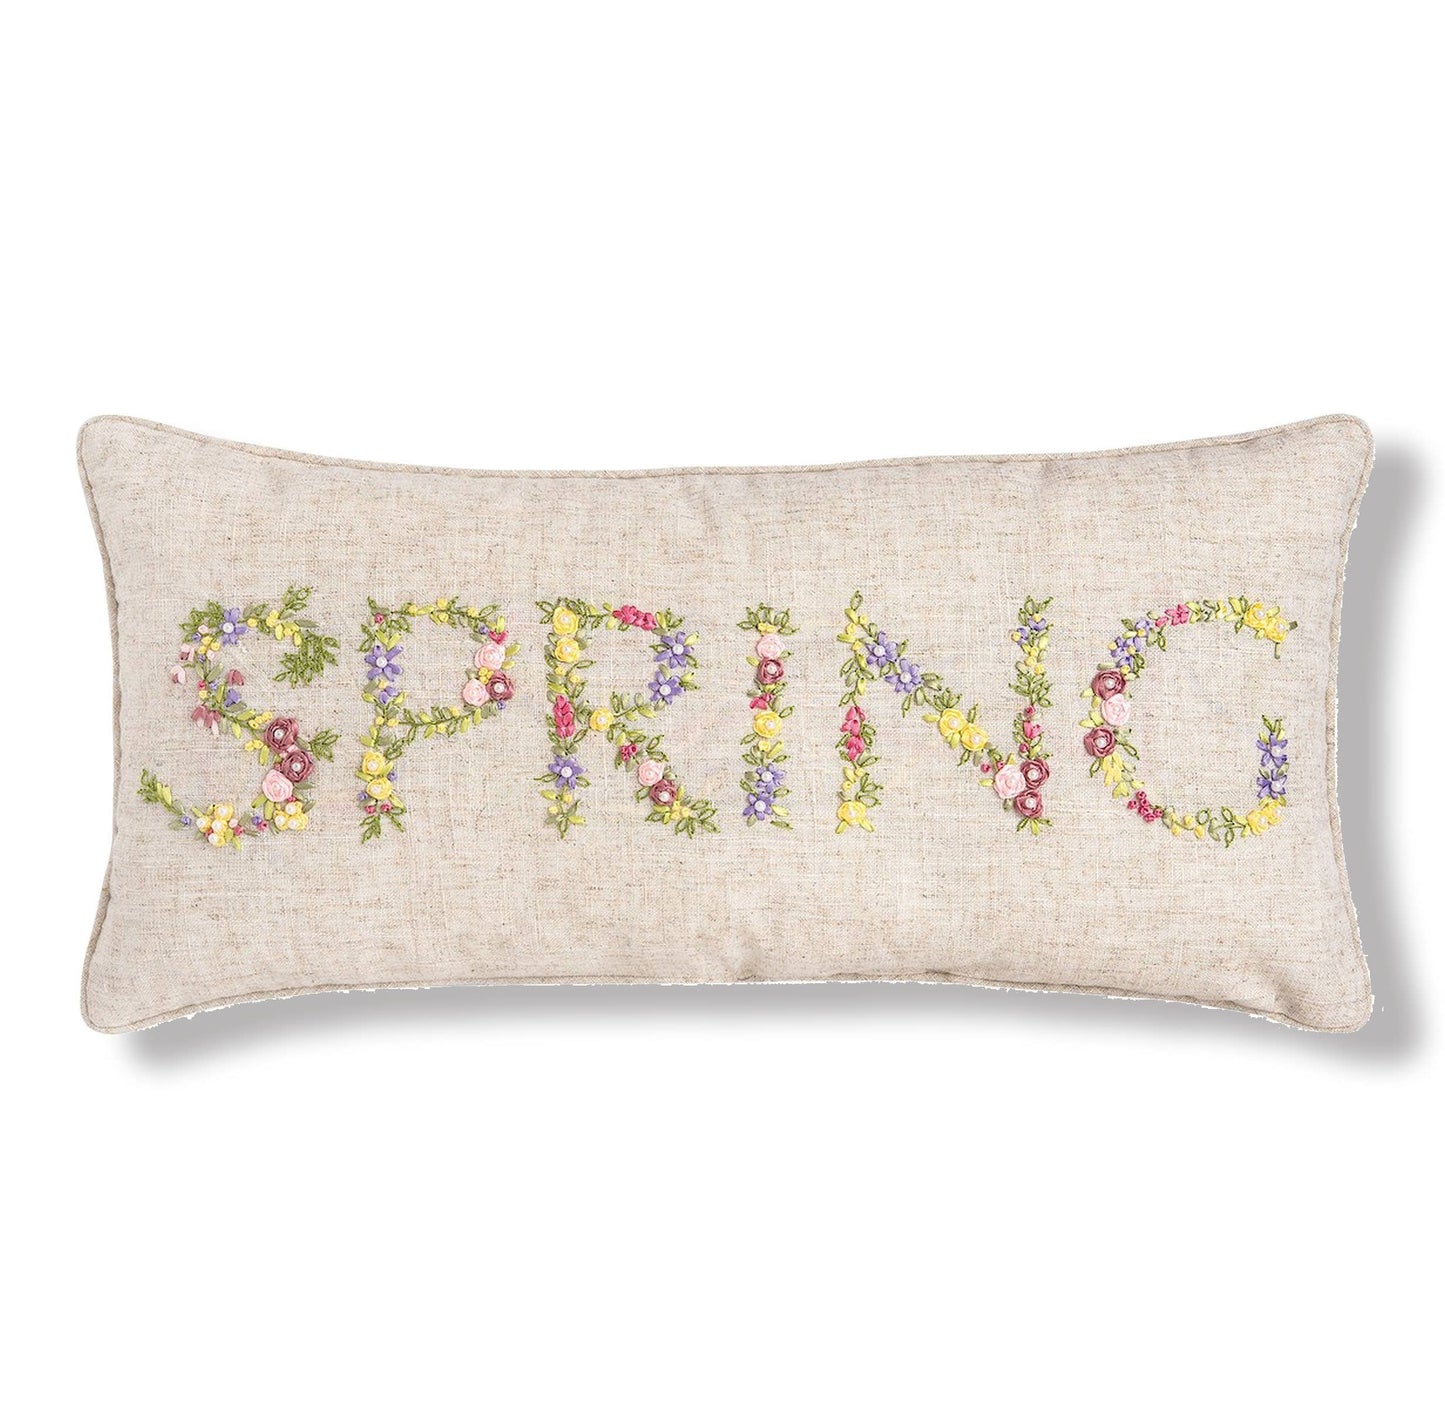 C&F Home - Spring Throw Pillow